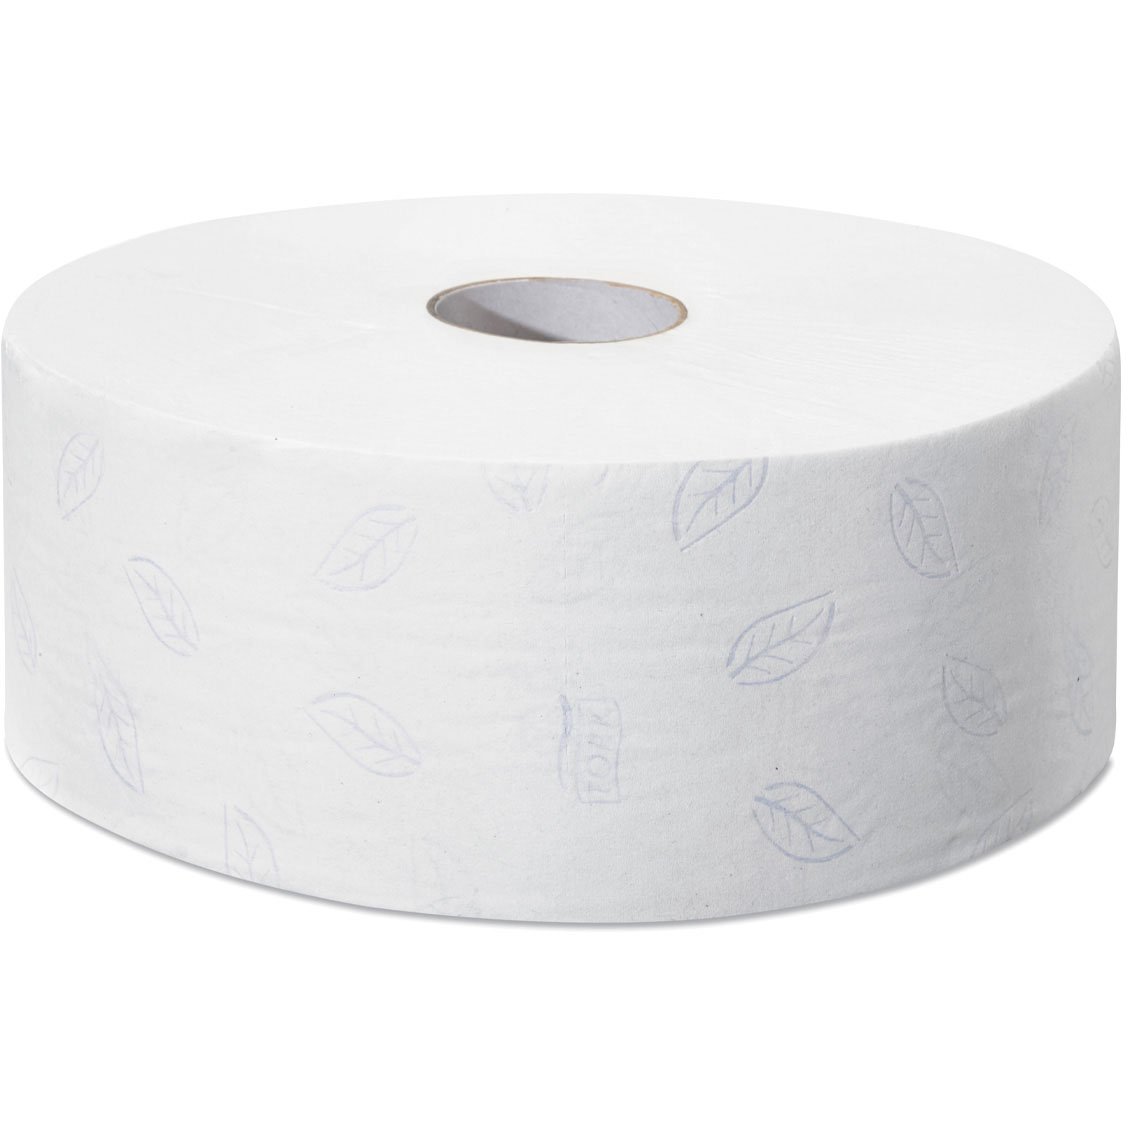 Tork Advanced toiletpapir hvid 2Lag T1